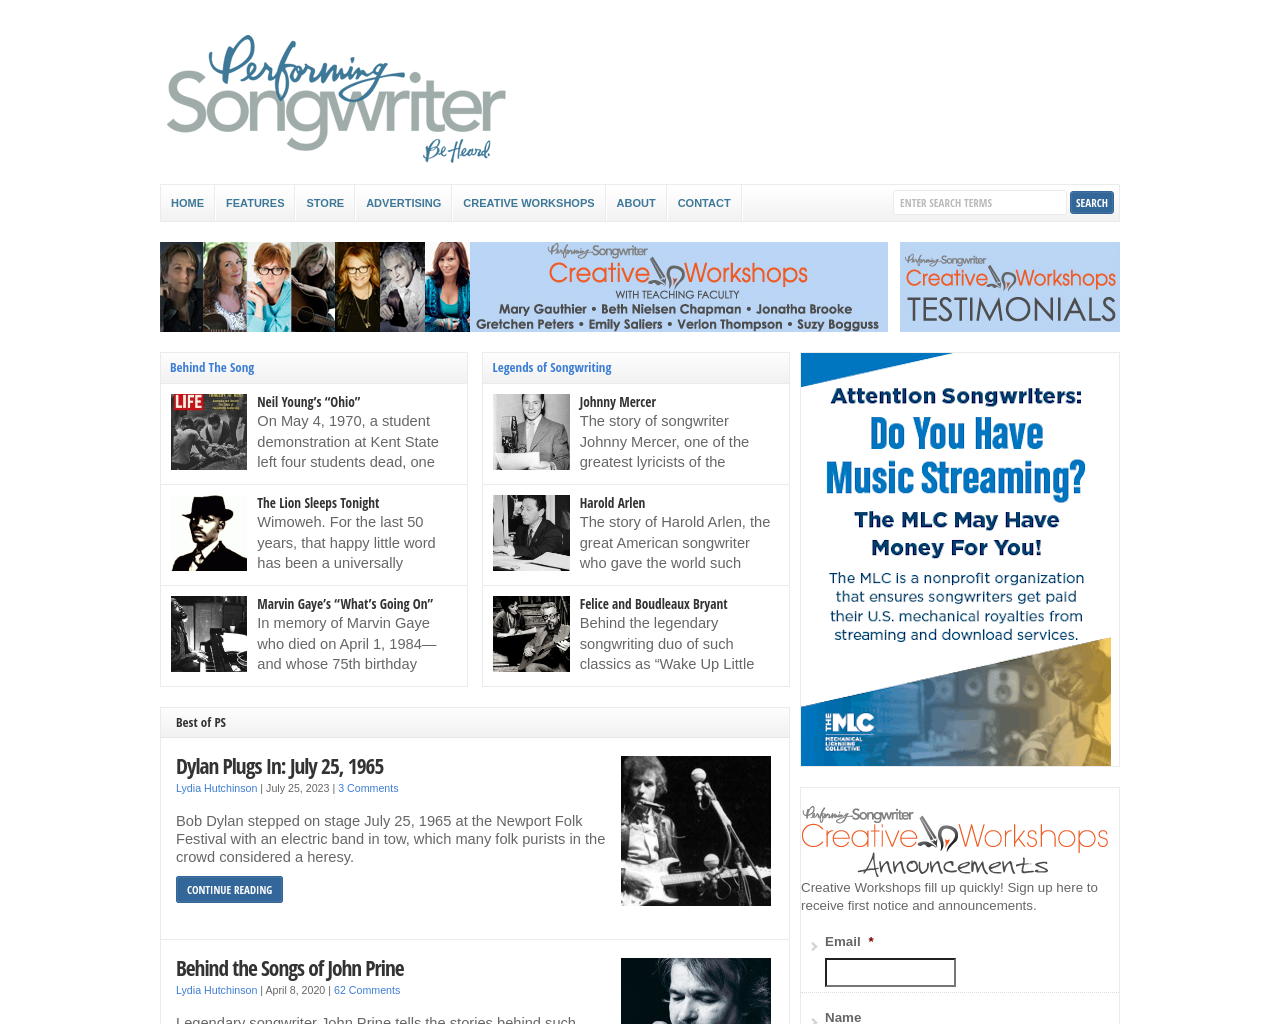 performingsongwriter.com